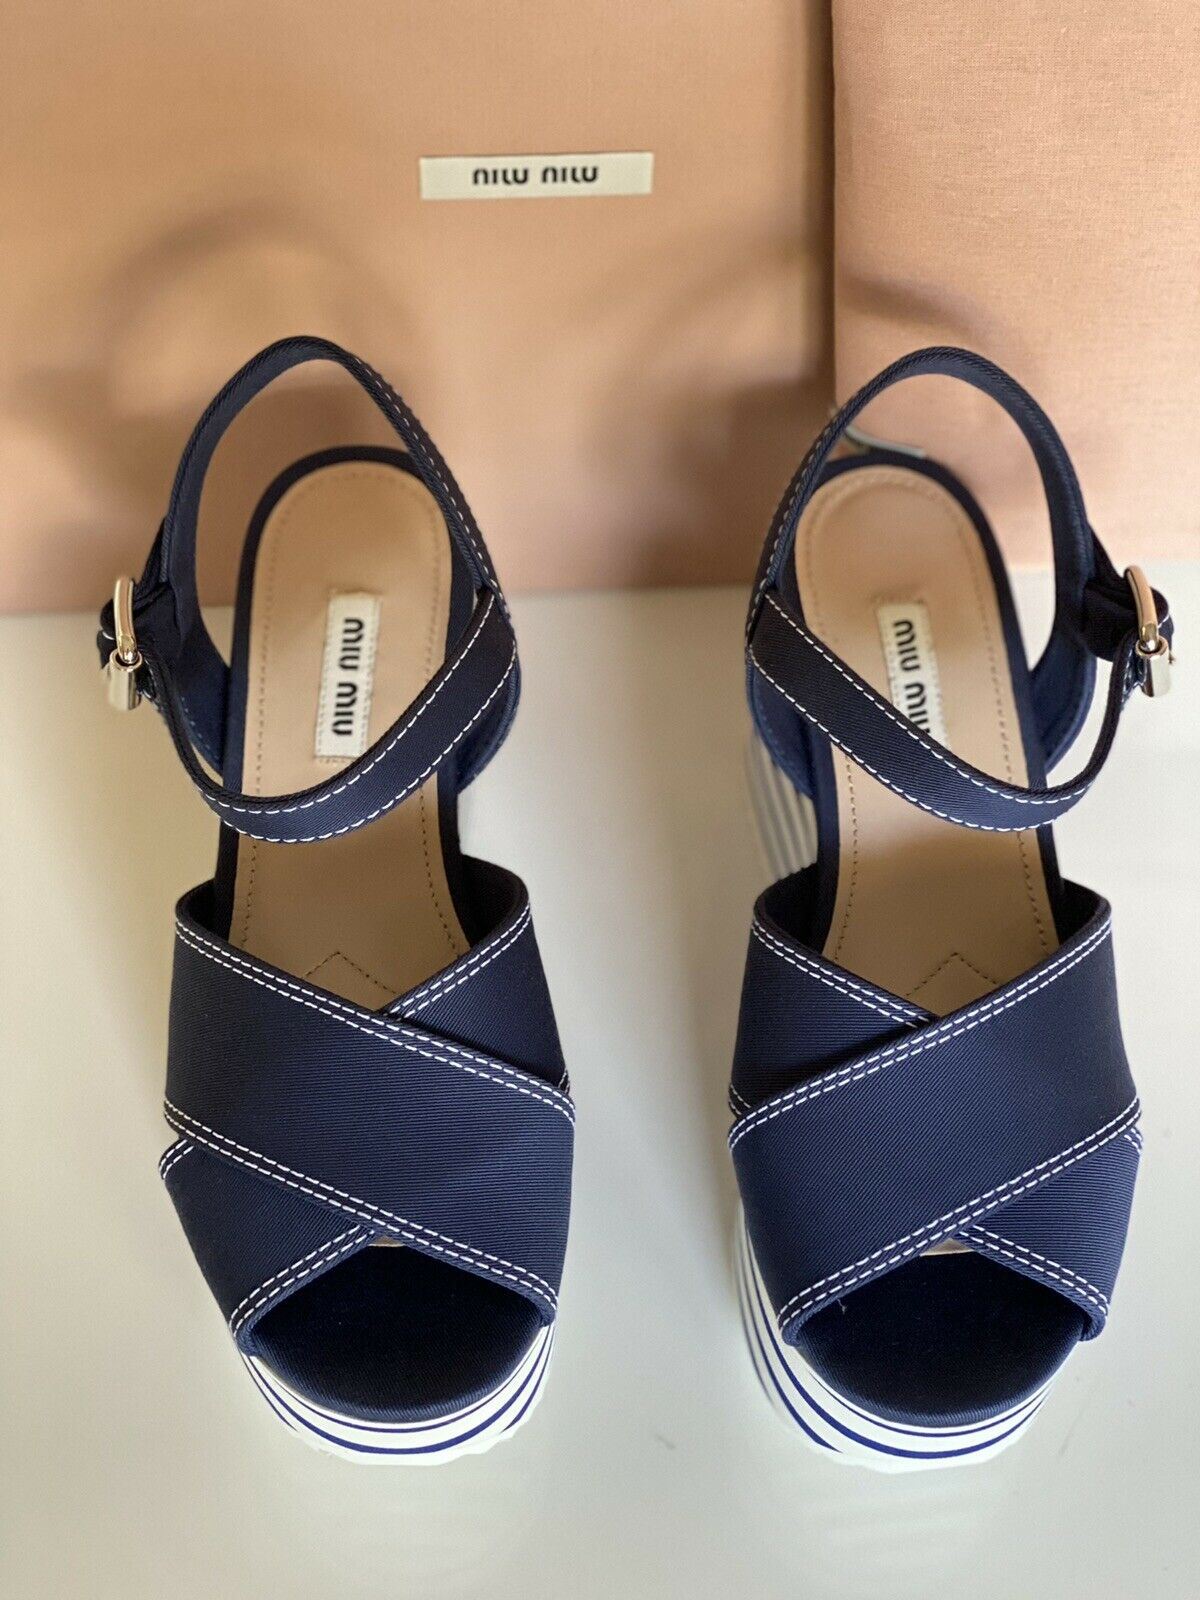 NIB $750 MIU MIU Women's Platform Wedge Blue Sandals 7.5 US (37.5 Euro) 5XZ441